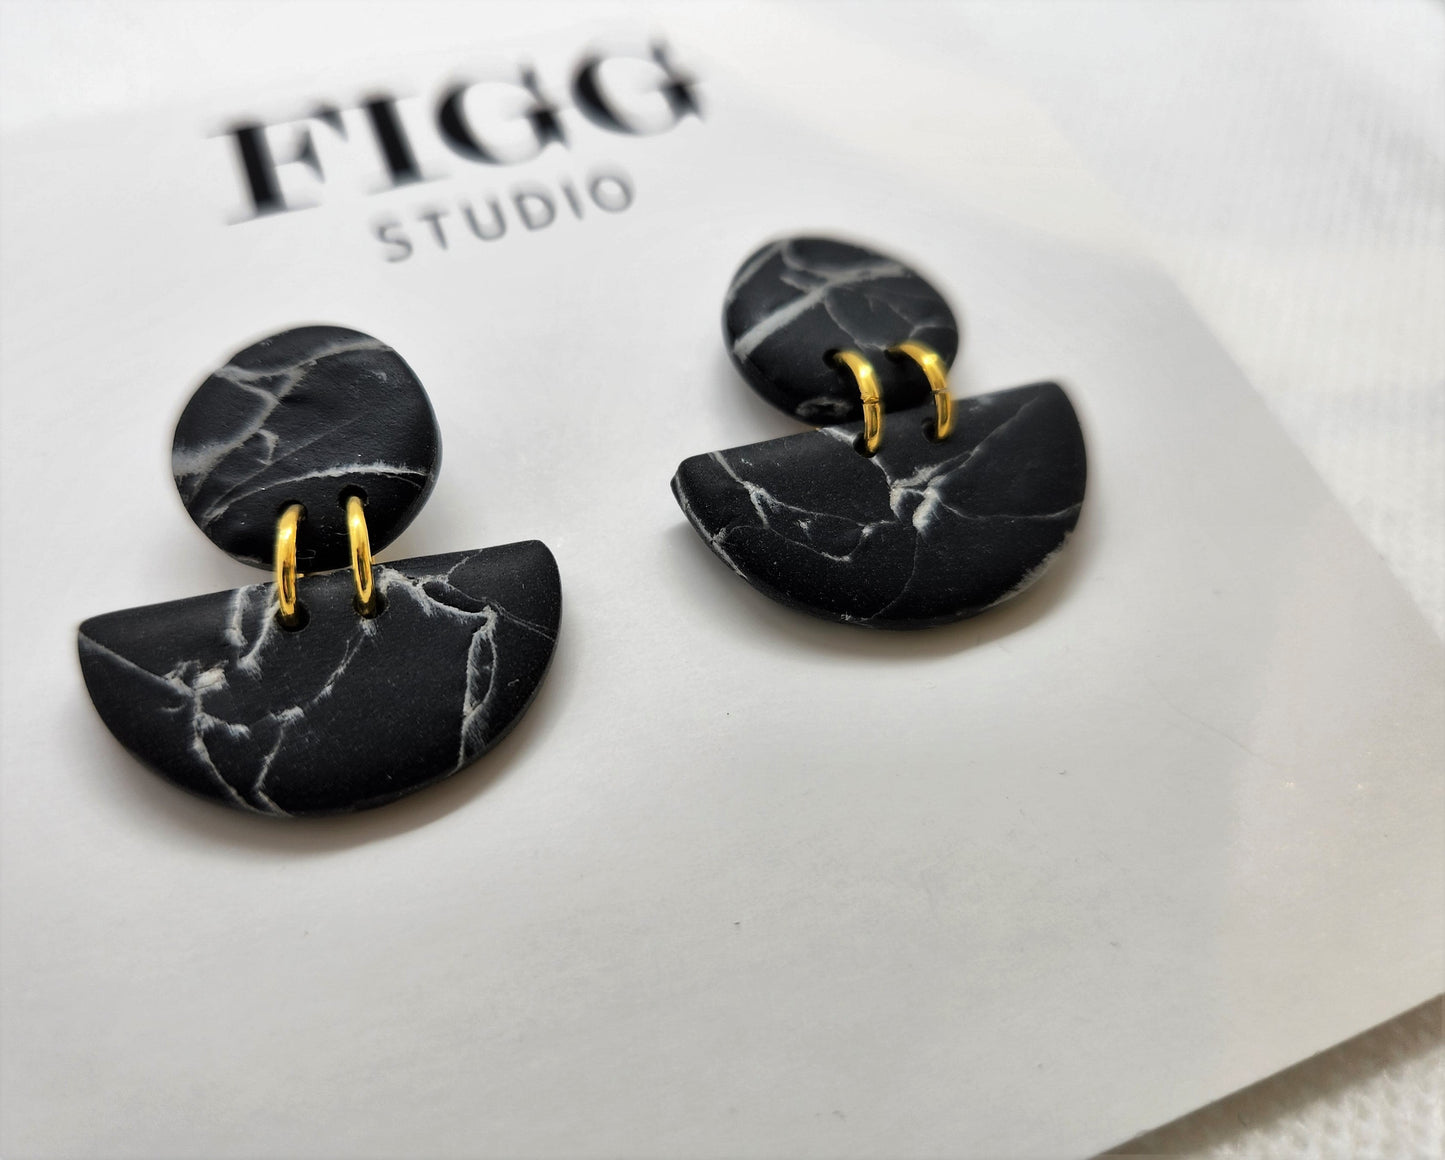 Clementine Earrings by Figg Studio